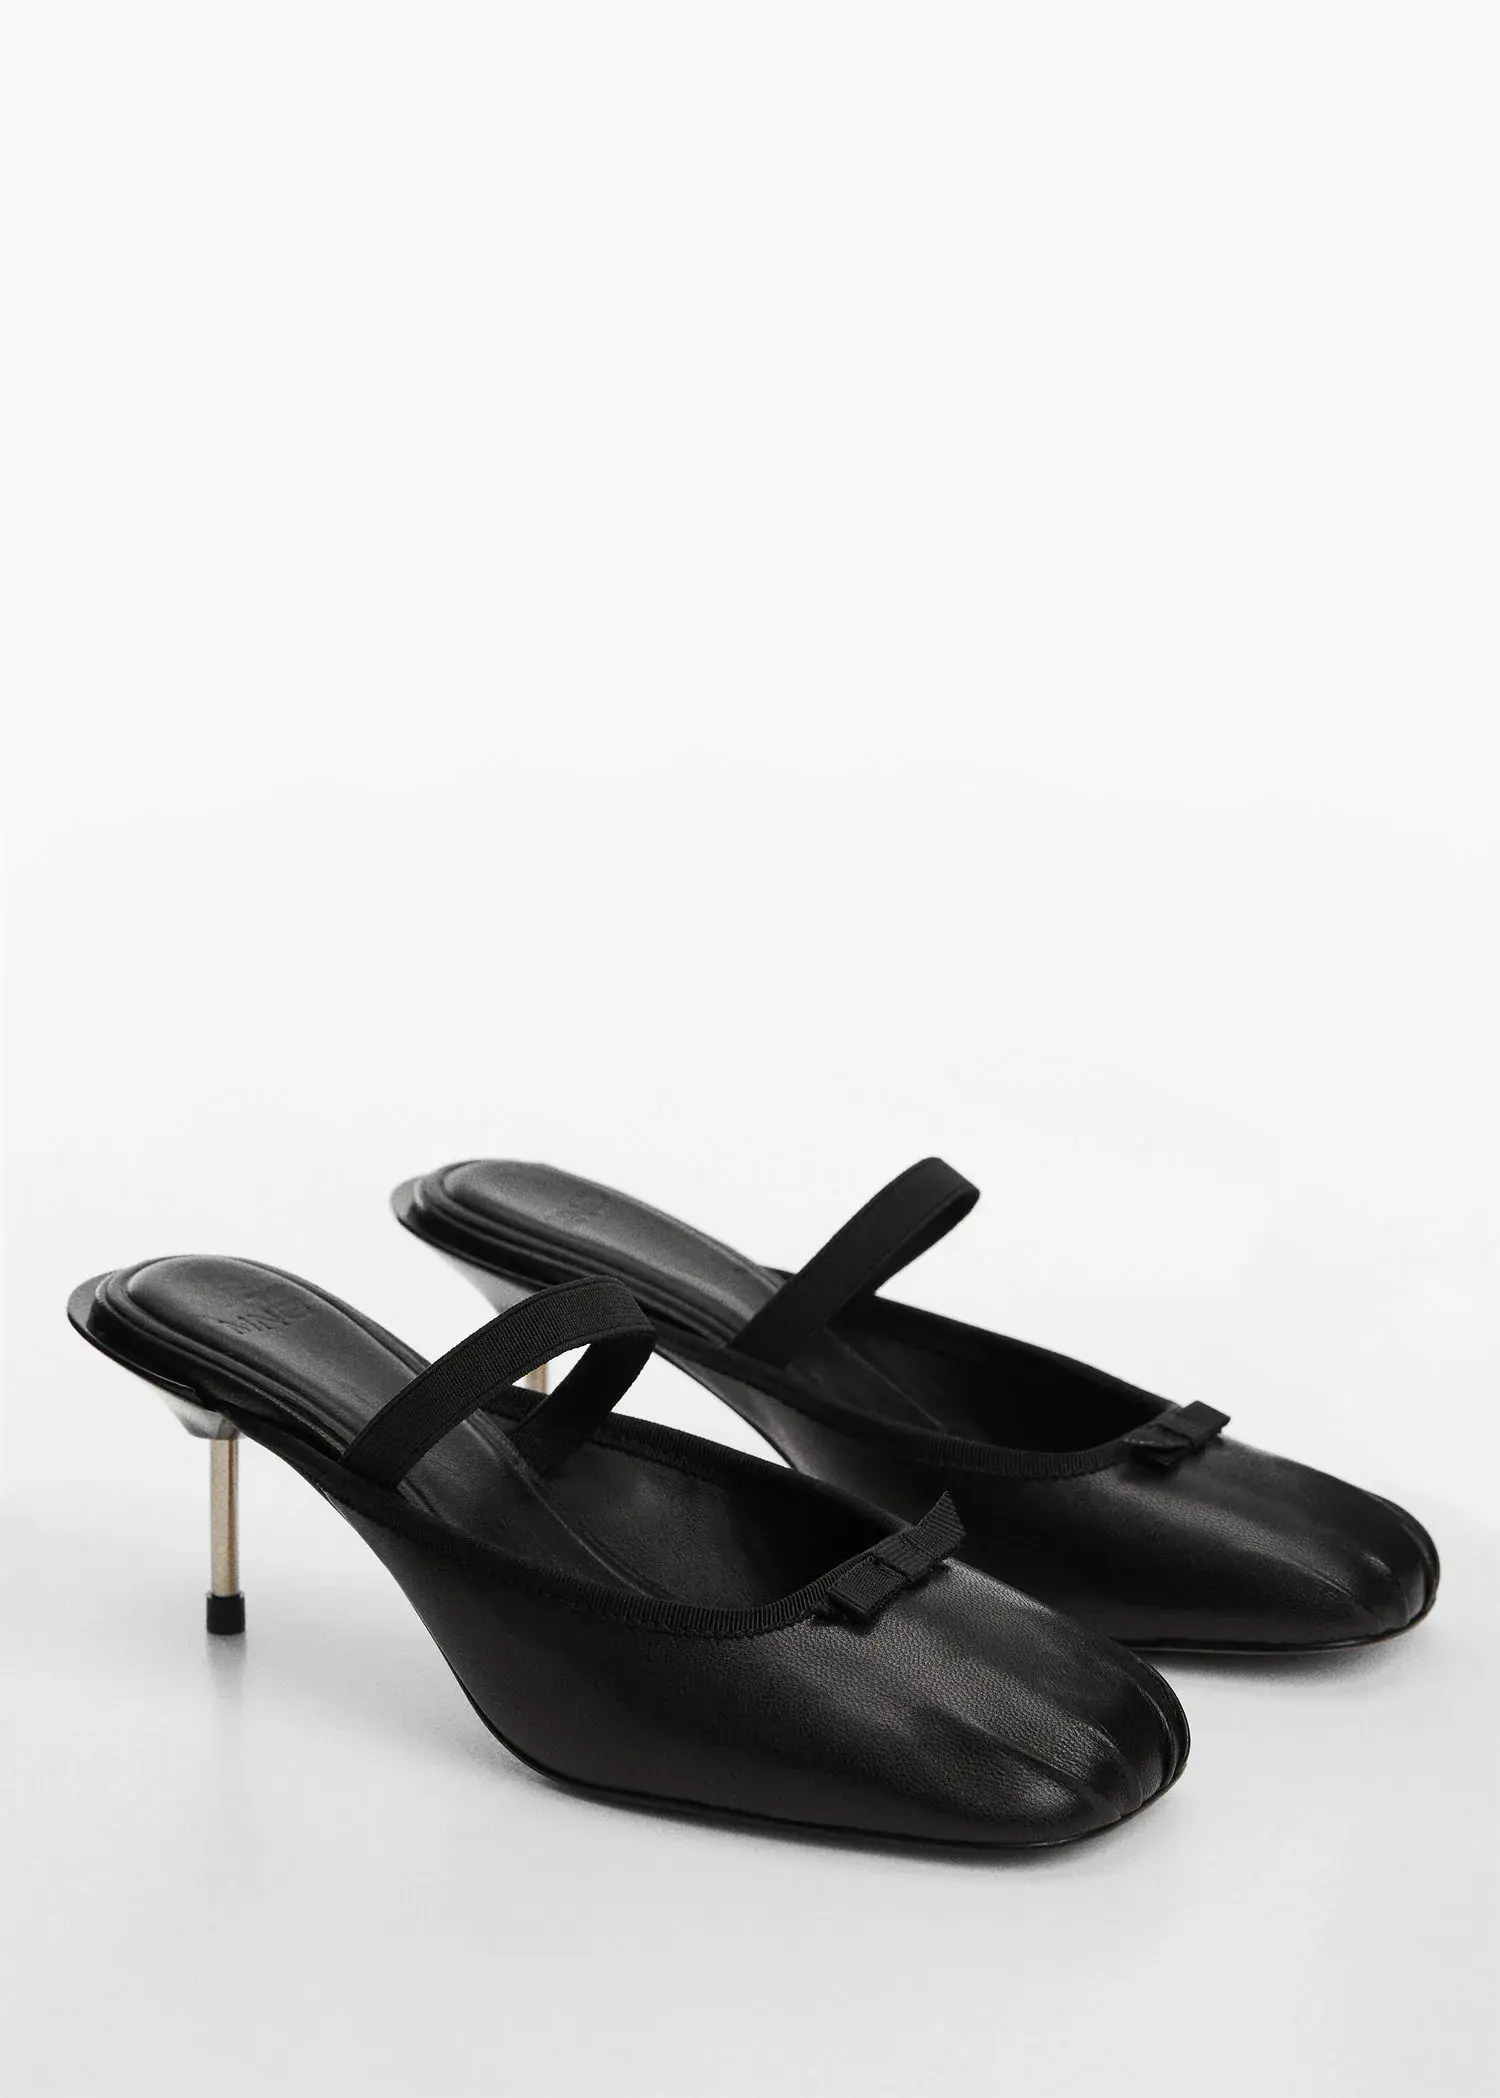 Mango Leather ballerinas with metallic heel. 3